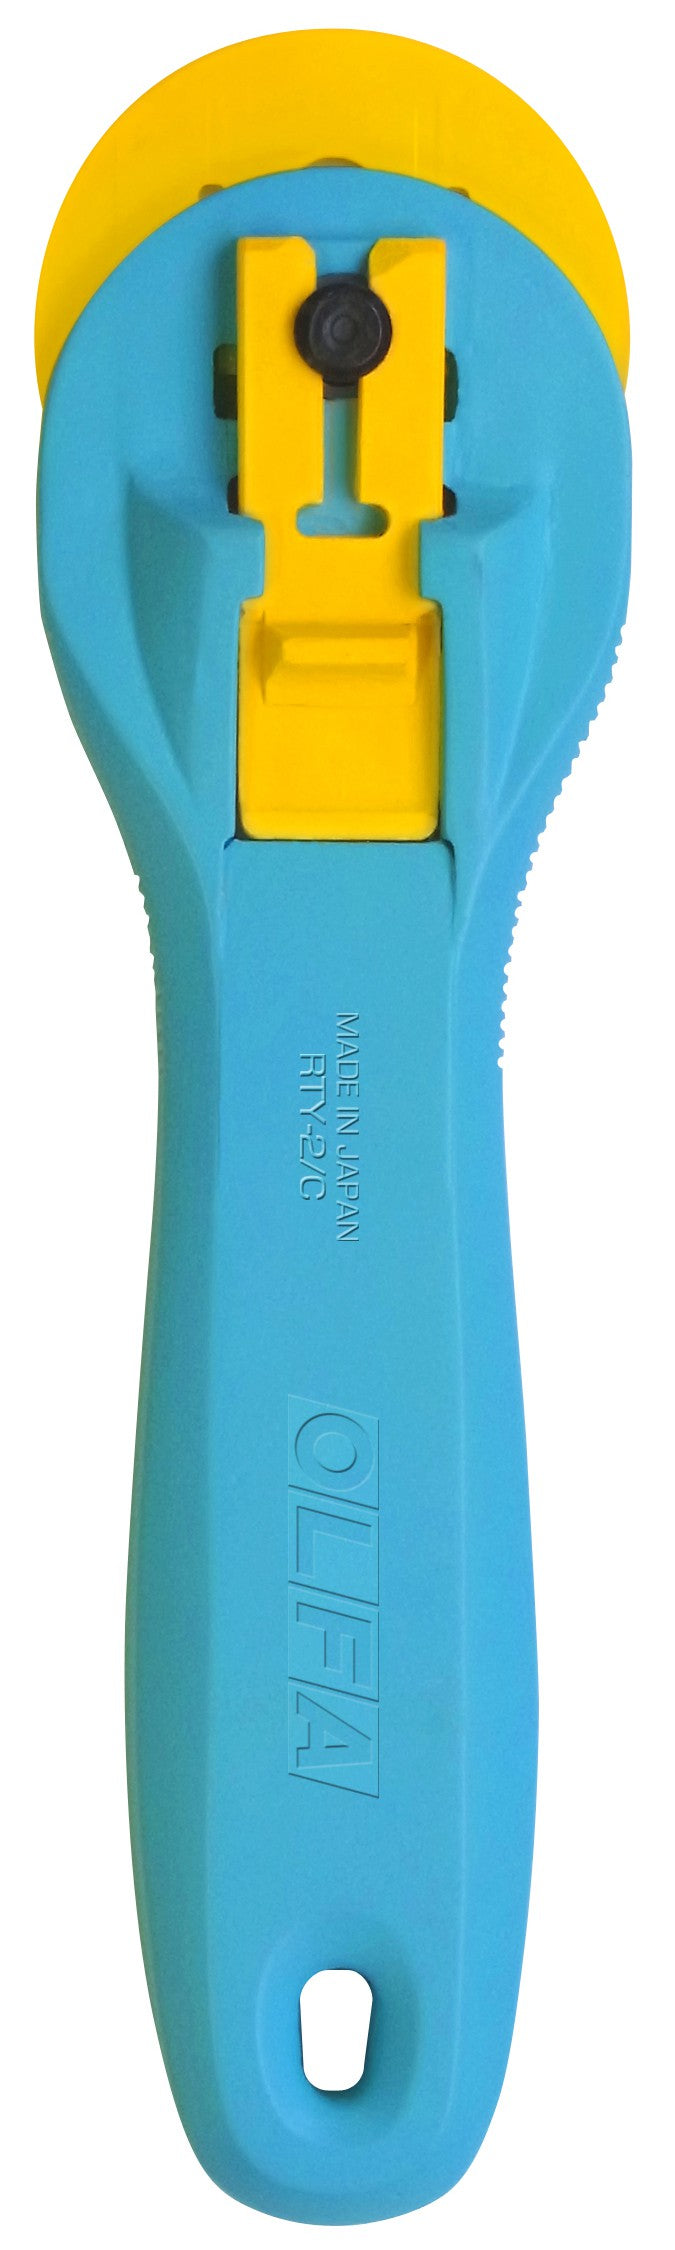 45mm Olfa Splash Rotary Cutter - Aqua